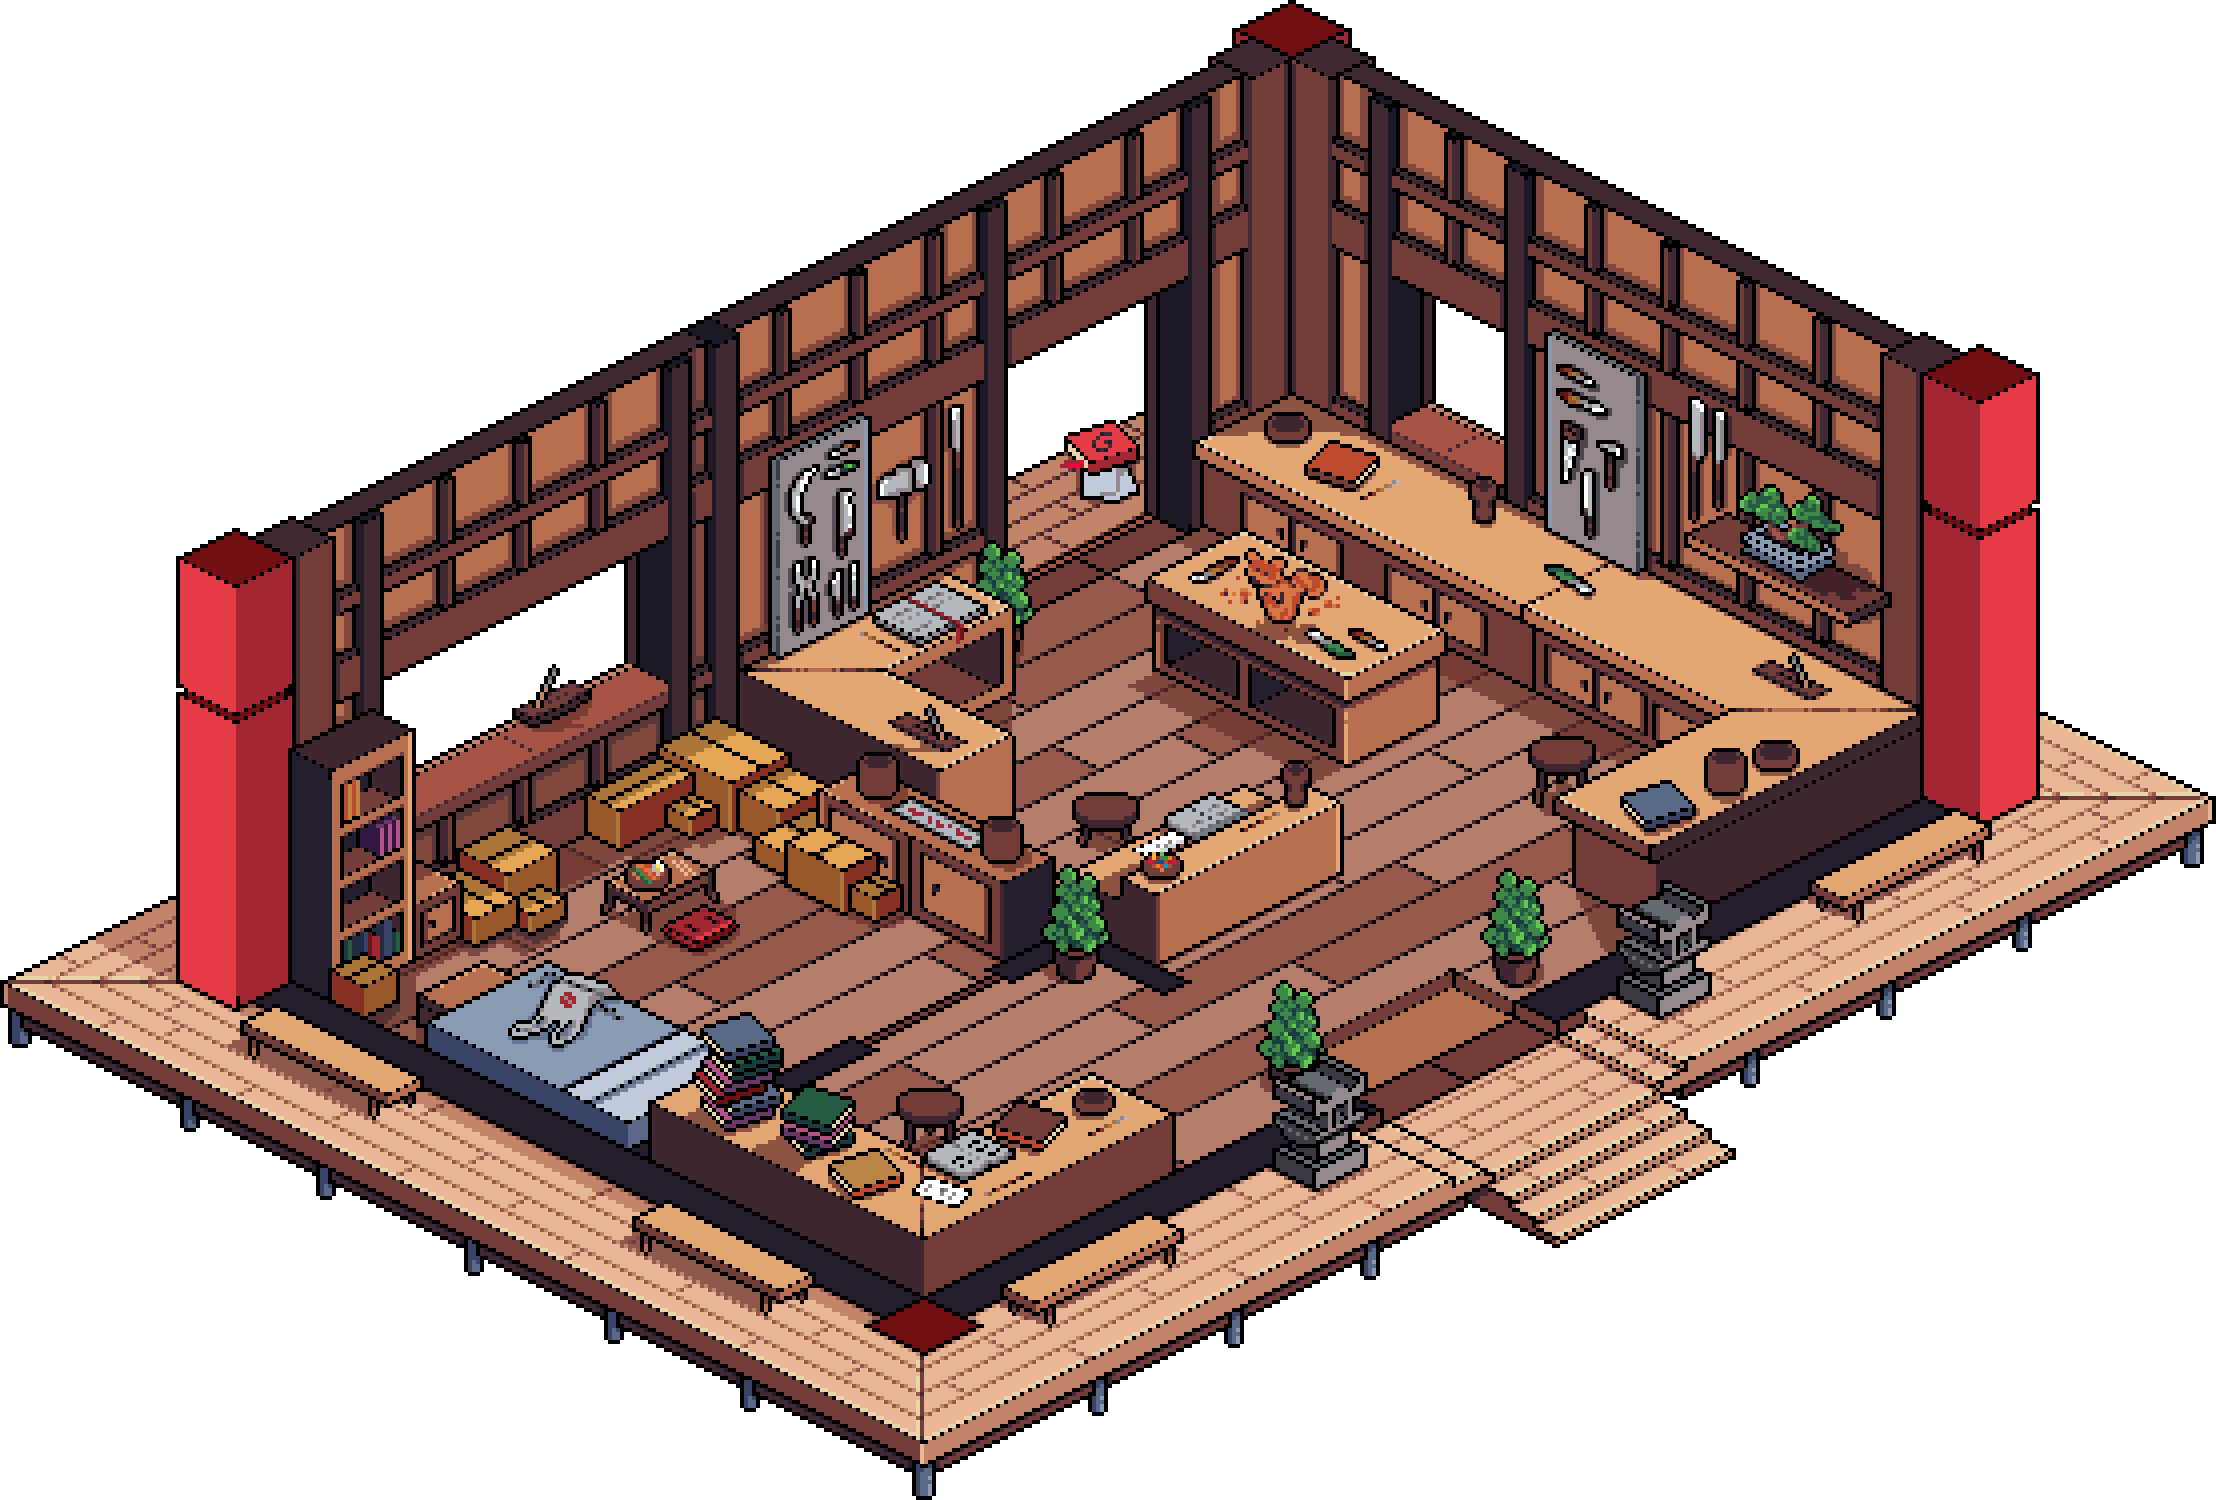 The Pixel Shop